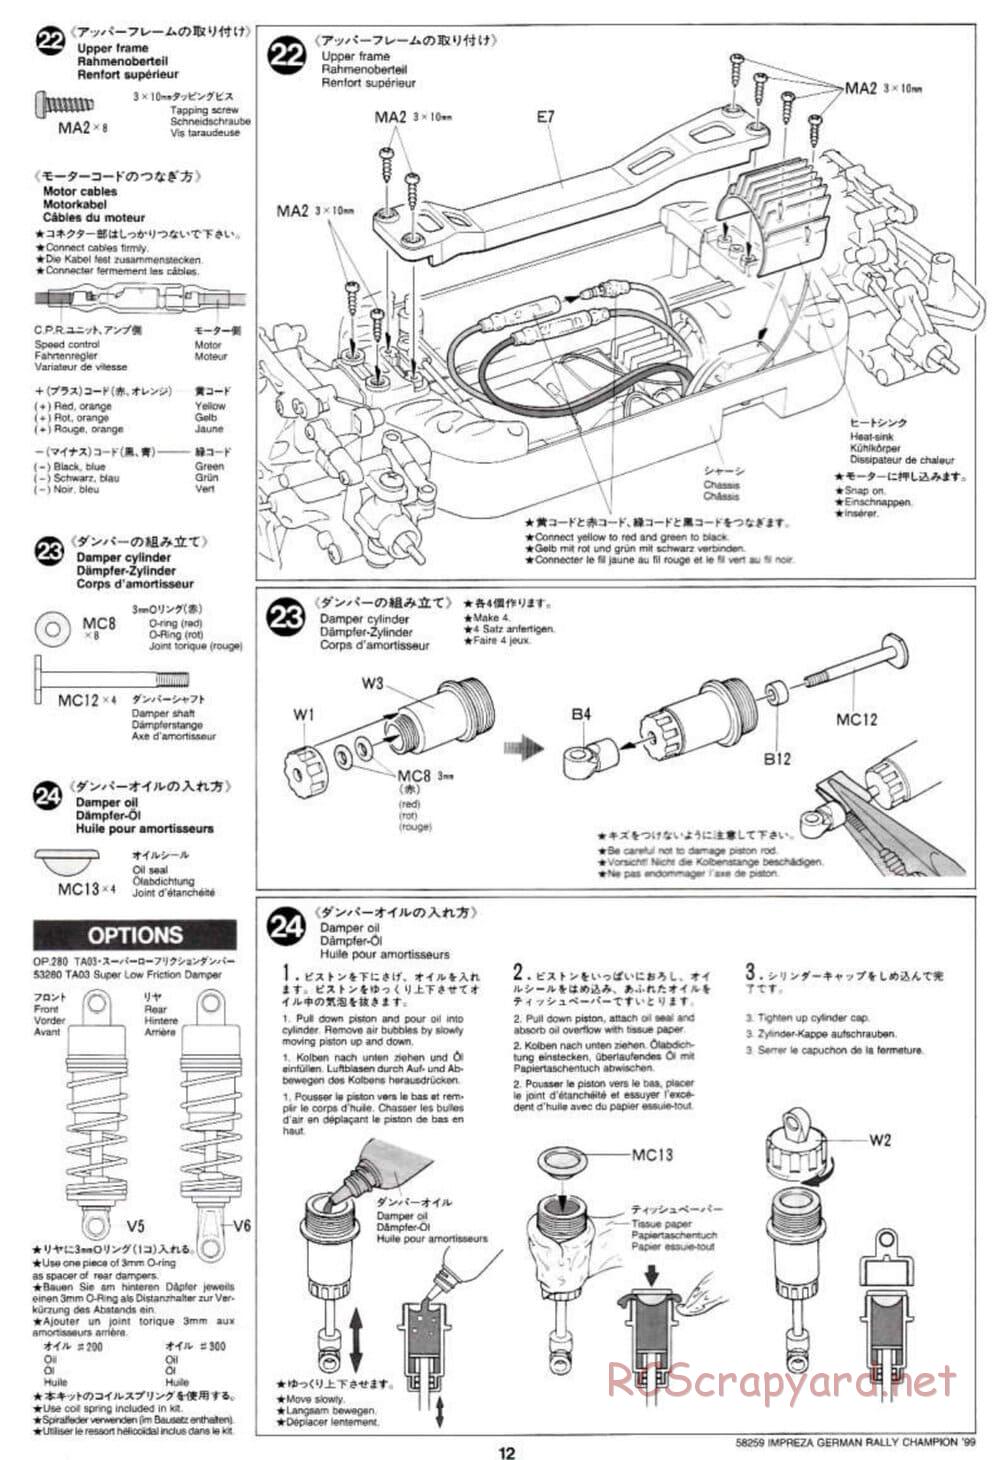 Tamiya - Subaru Impreza German Rally Champion 99 - TB-01 Chassis - Manual - Page 12